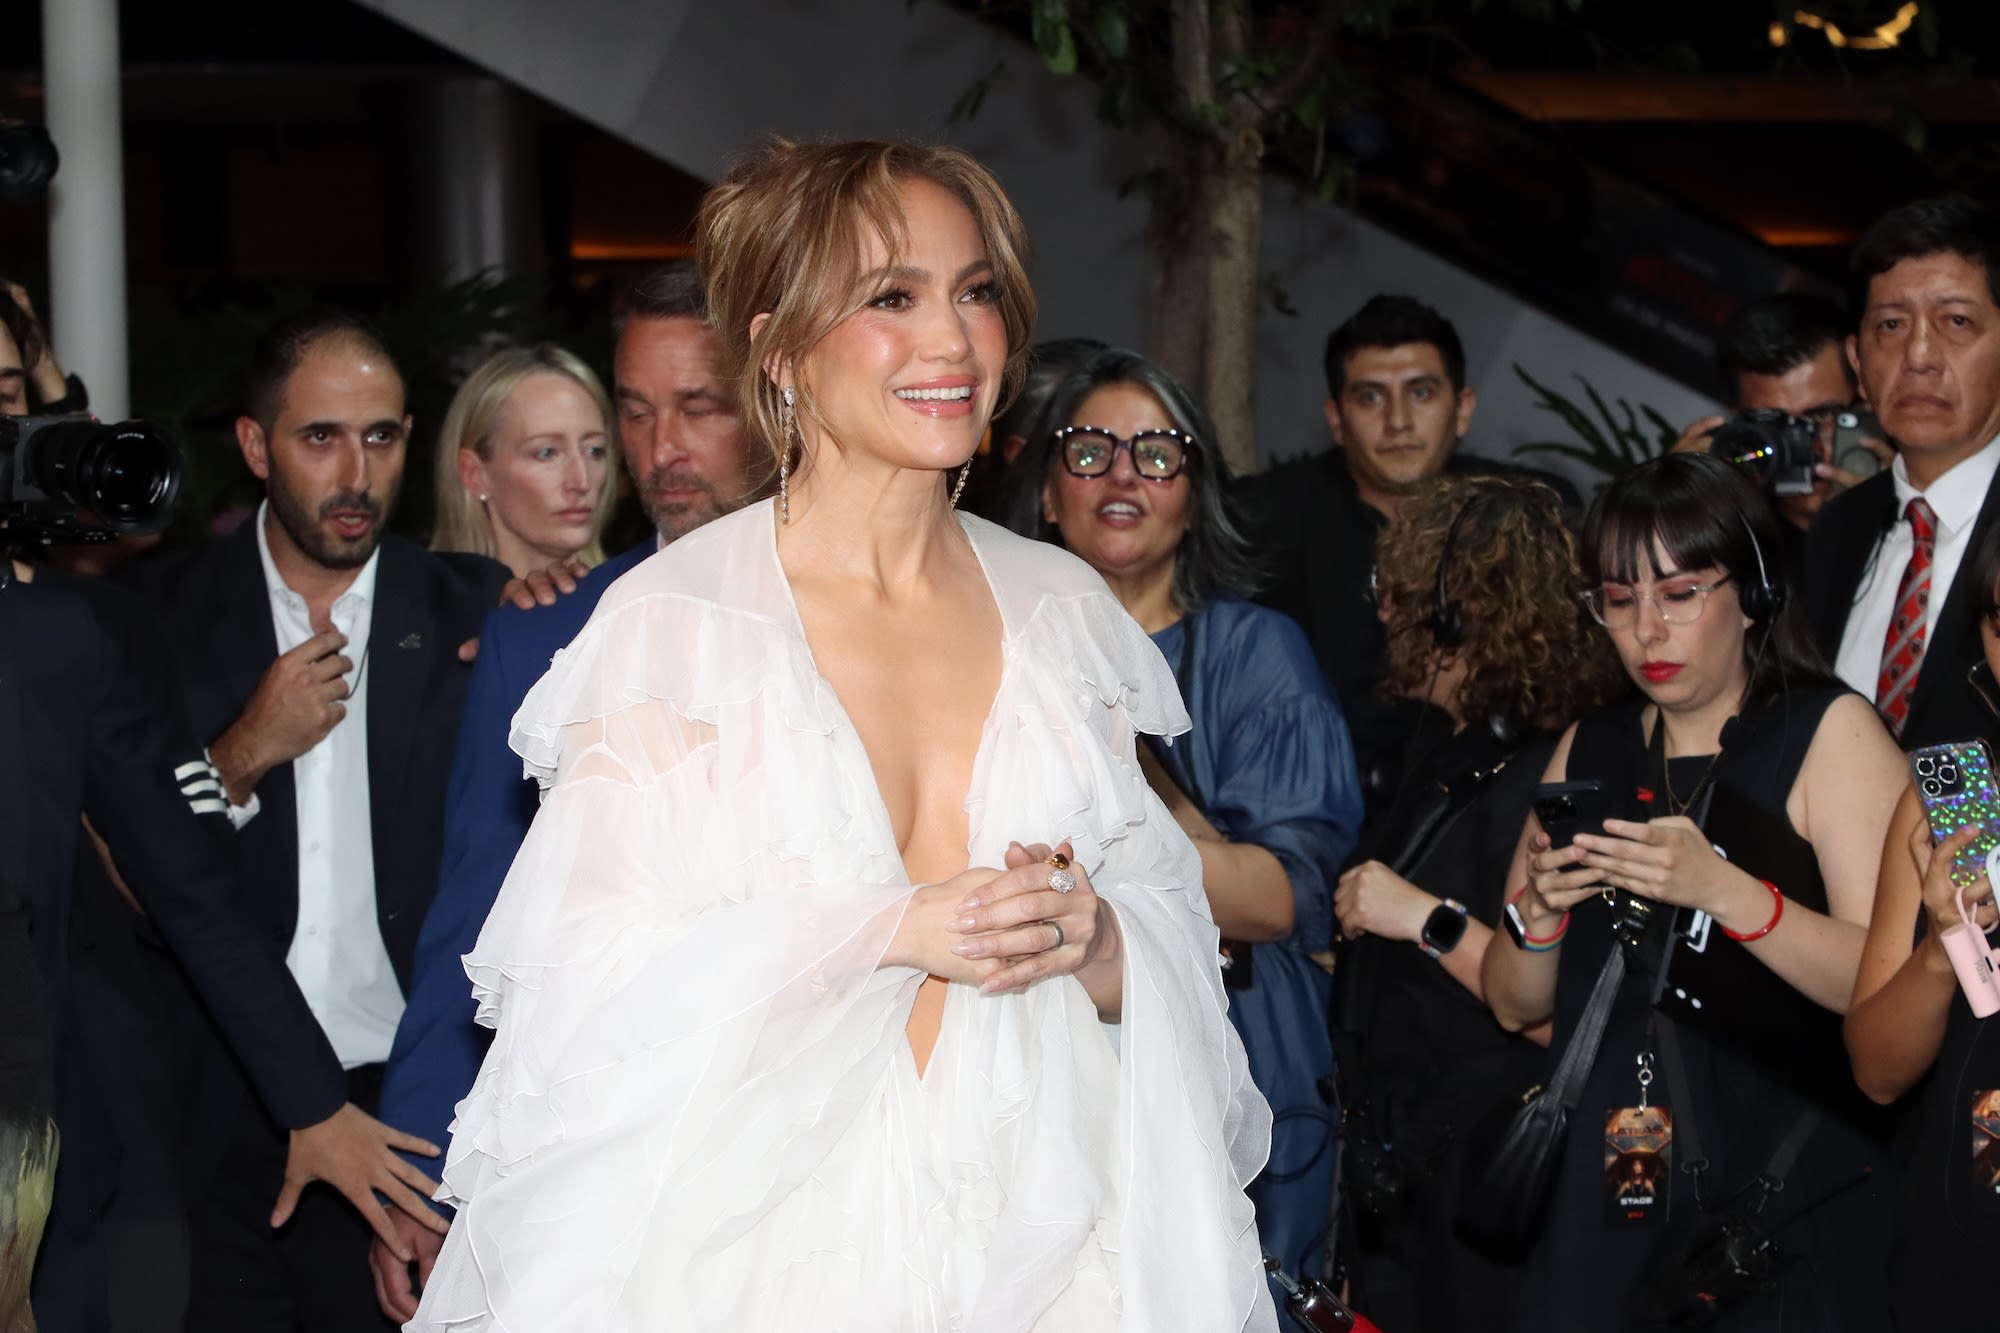 Jennifer Lopez Speaks Out on ‘Negativity’ Amid Ben Affleck Split Rumors, Tour Cancellation